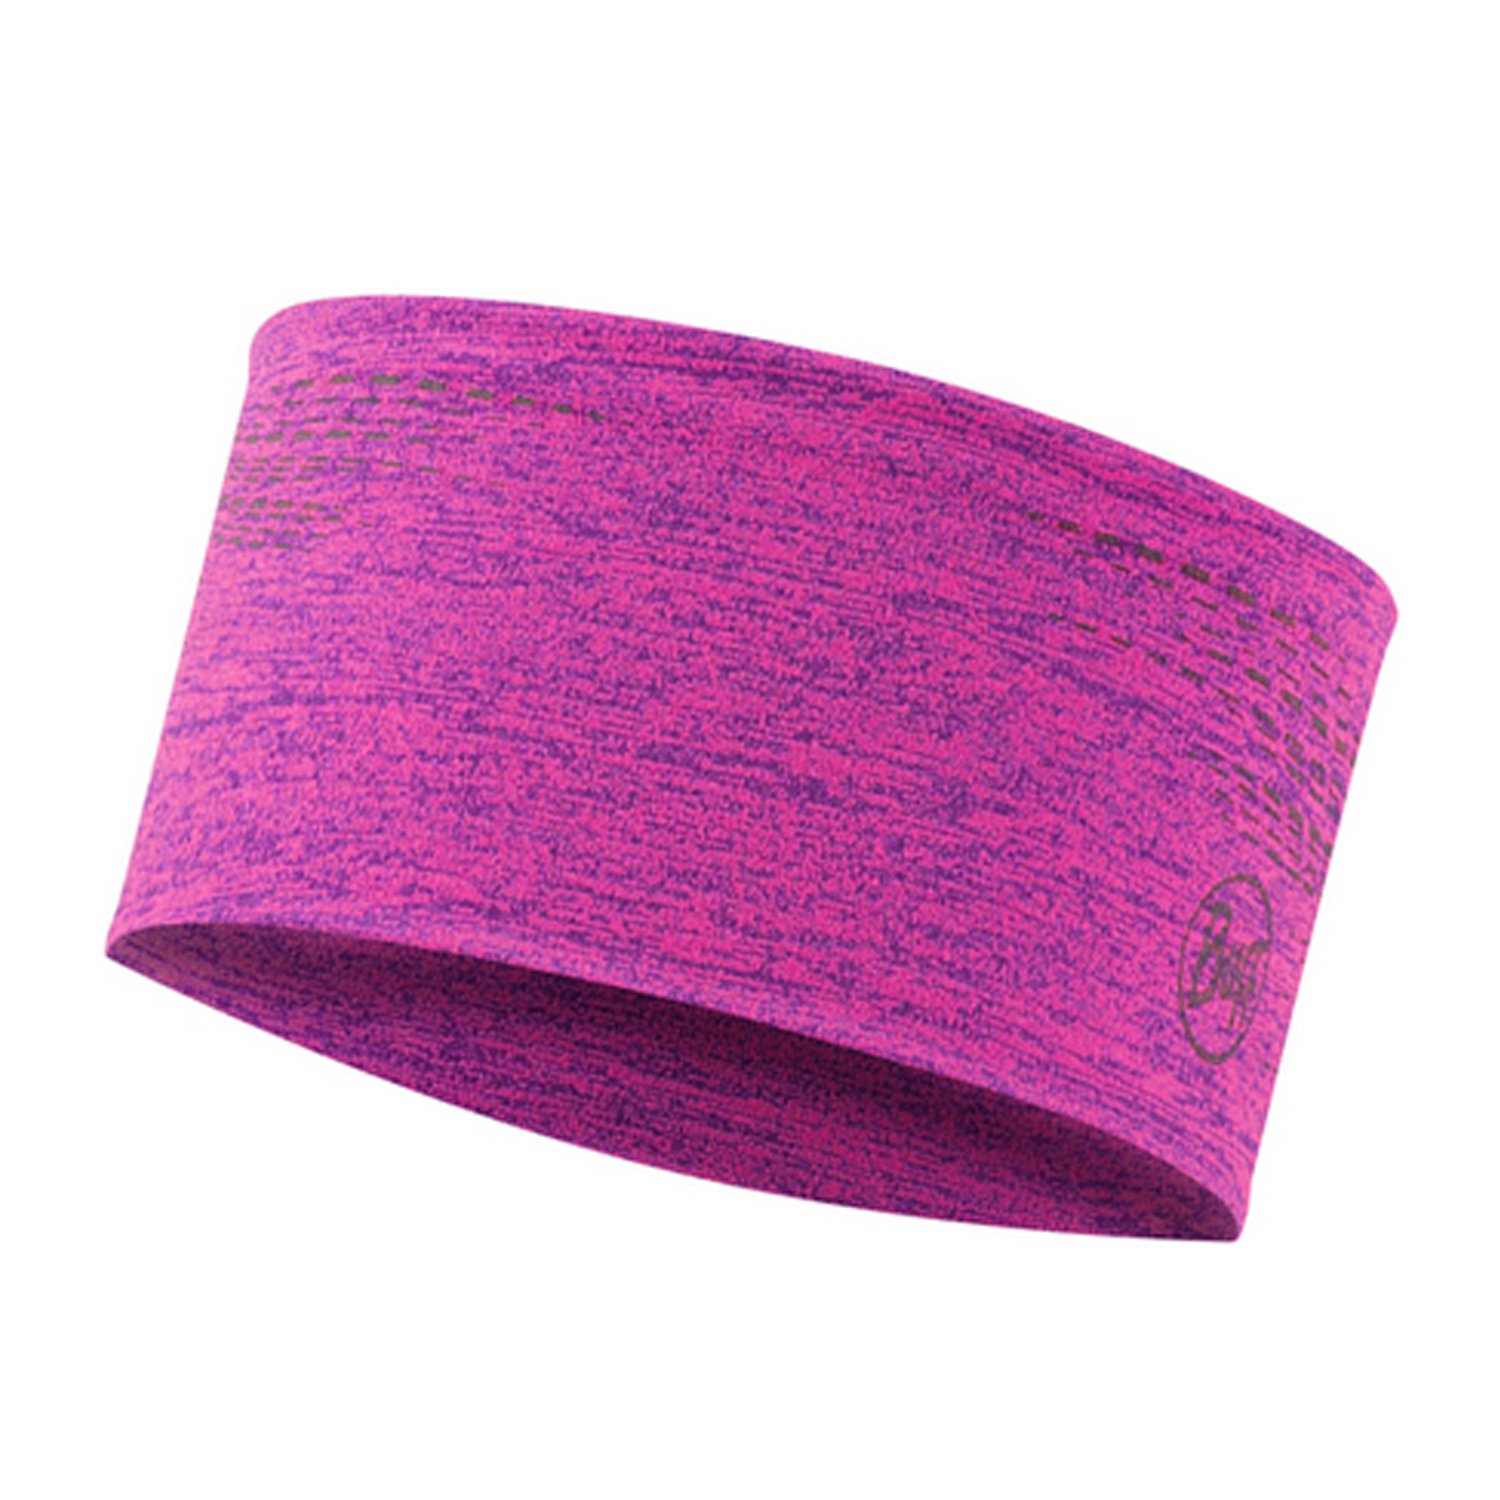 Повязка Buff DryFlx Headband Fluor, розовый, 2022-23, 118098.522.10.00 повязка buff dryflx headband pool us one size 118098 722 10 00